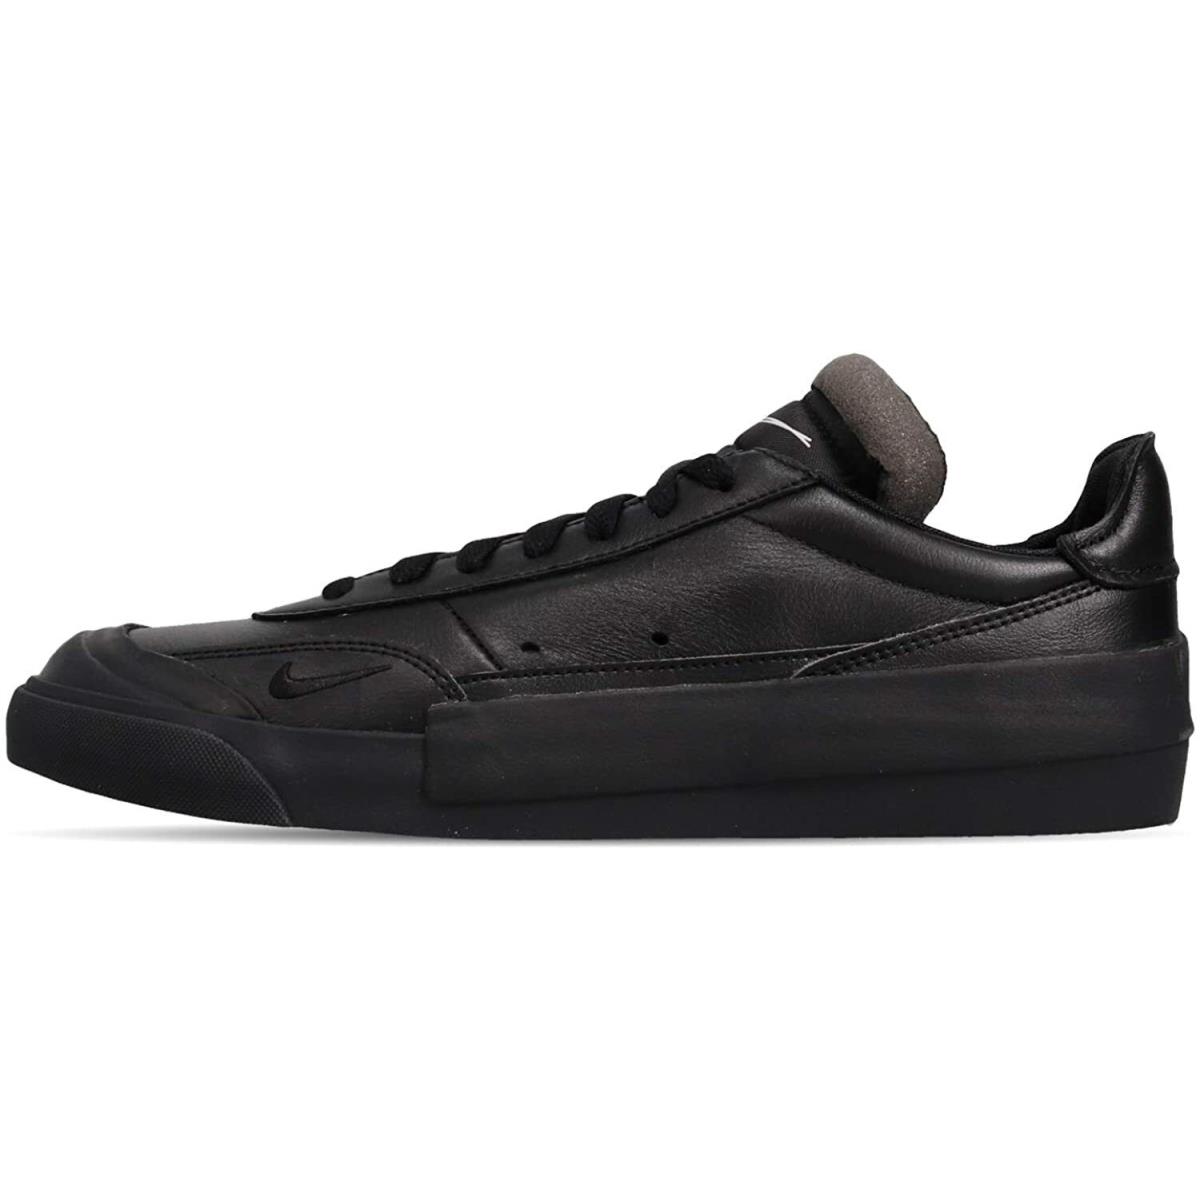 Nike Drop-type Prm Mens Cn6916-001 8.5 9 9.5 10.5 12 Black Shoes - Black